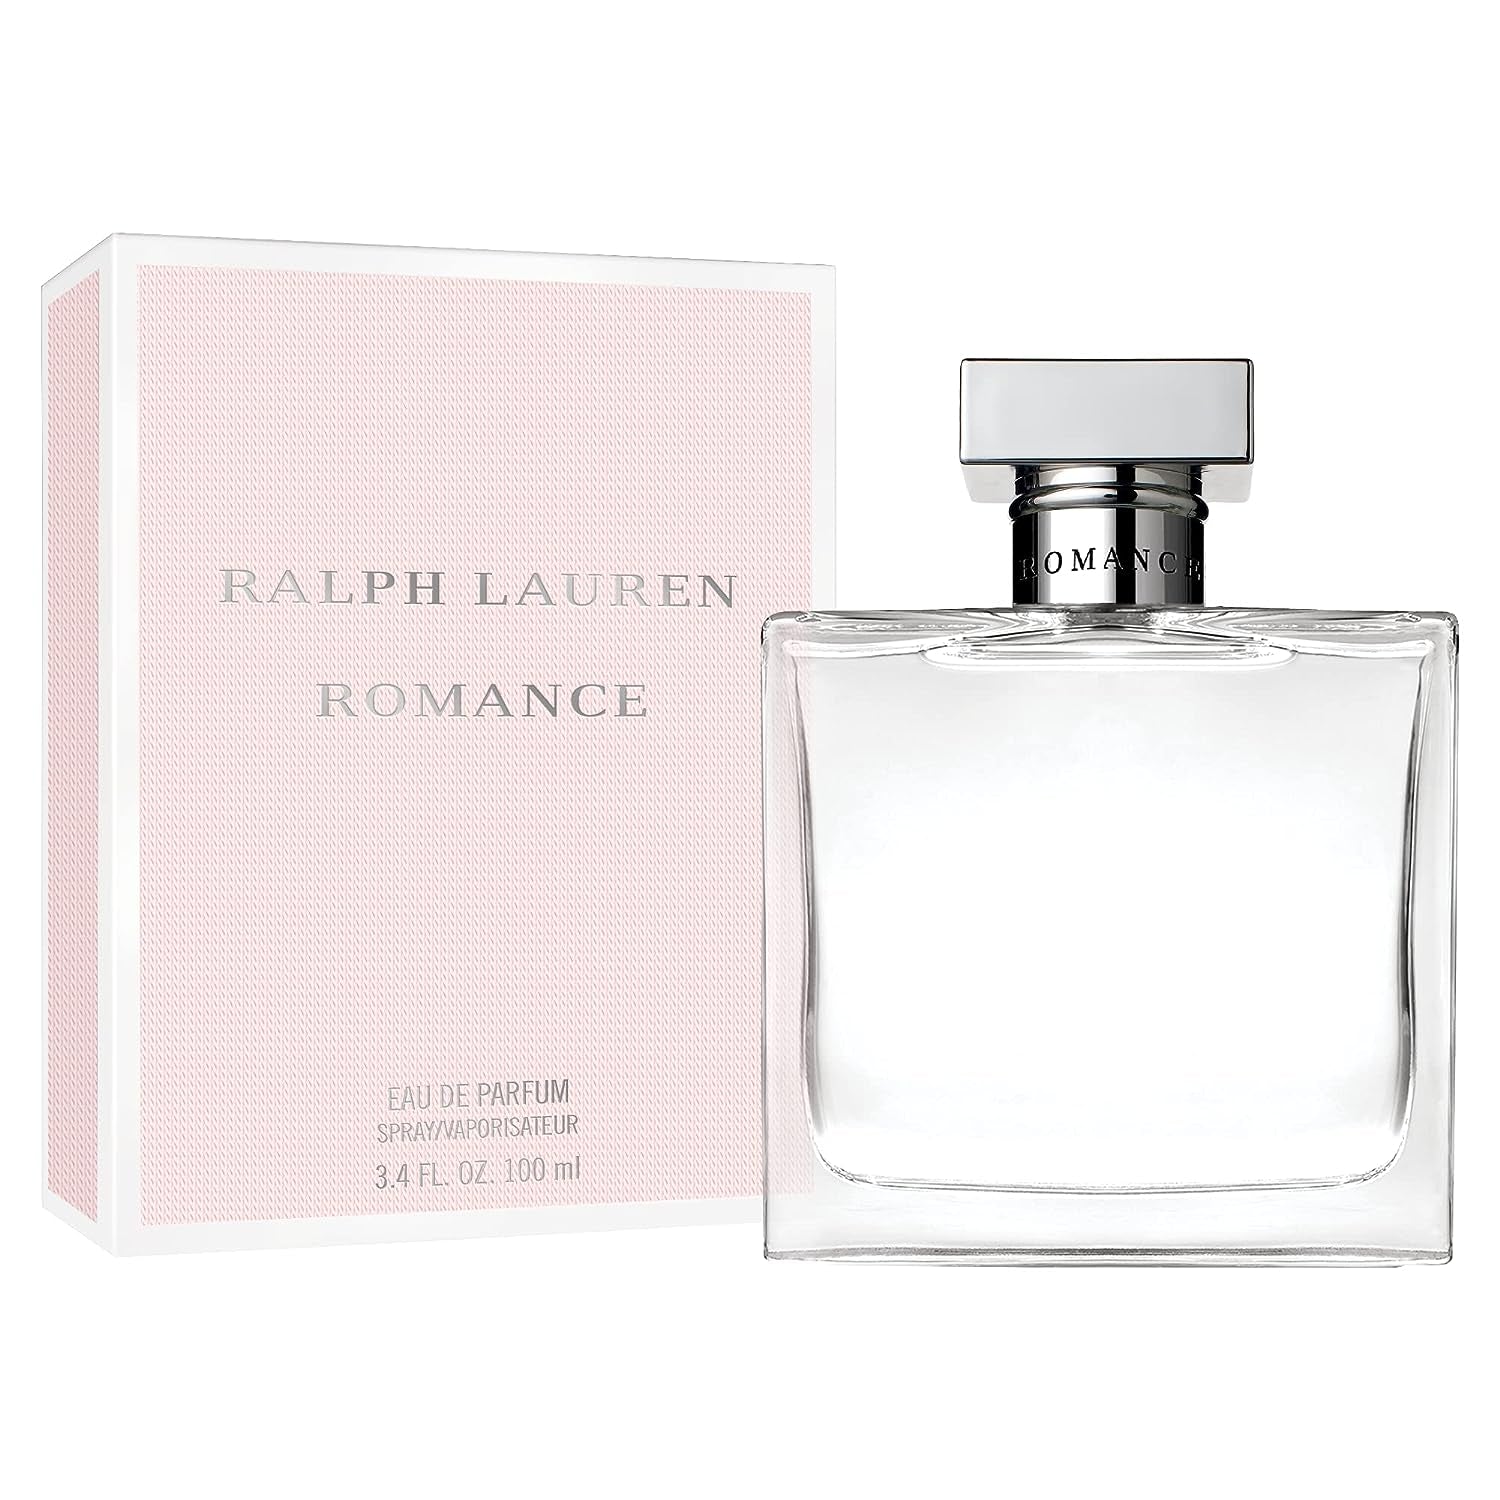 - Romance - Eau De Parfum - Women'S Perfume - Floral & Woody - with Rose, Jasmine, and Berries - Medium Intensity